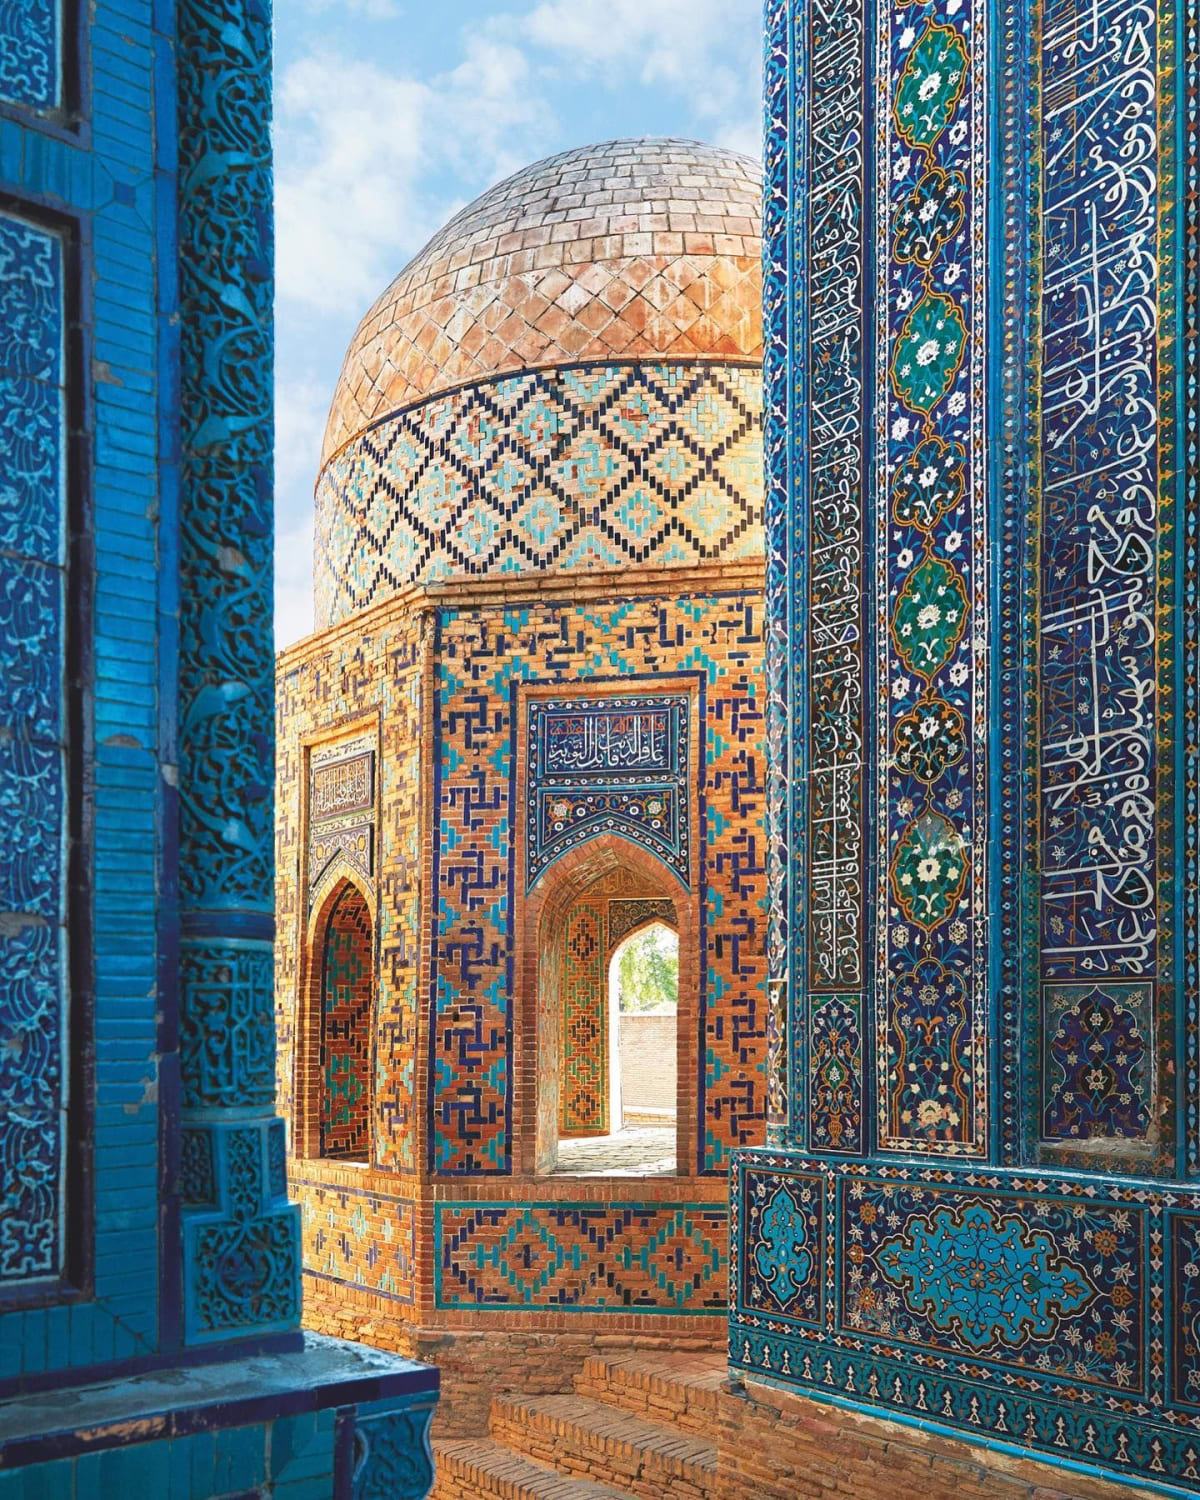 The stunning Shah-i-Zinda necropolis in Samarkand, Uzbekistan